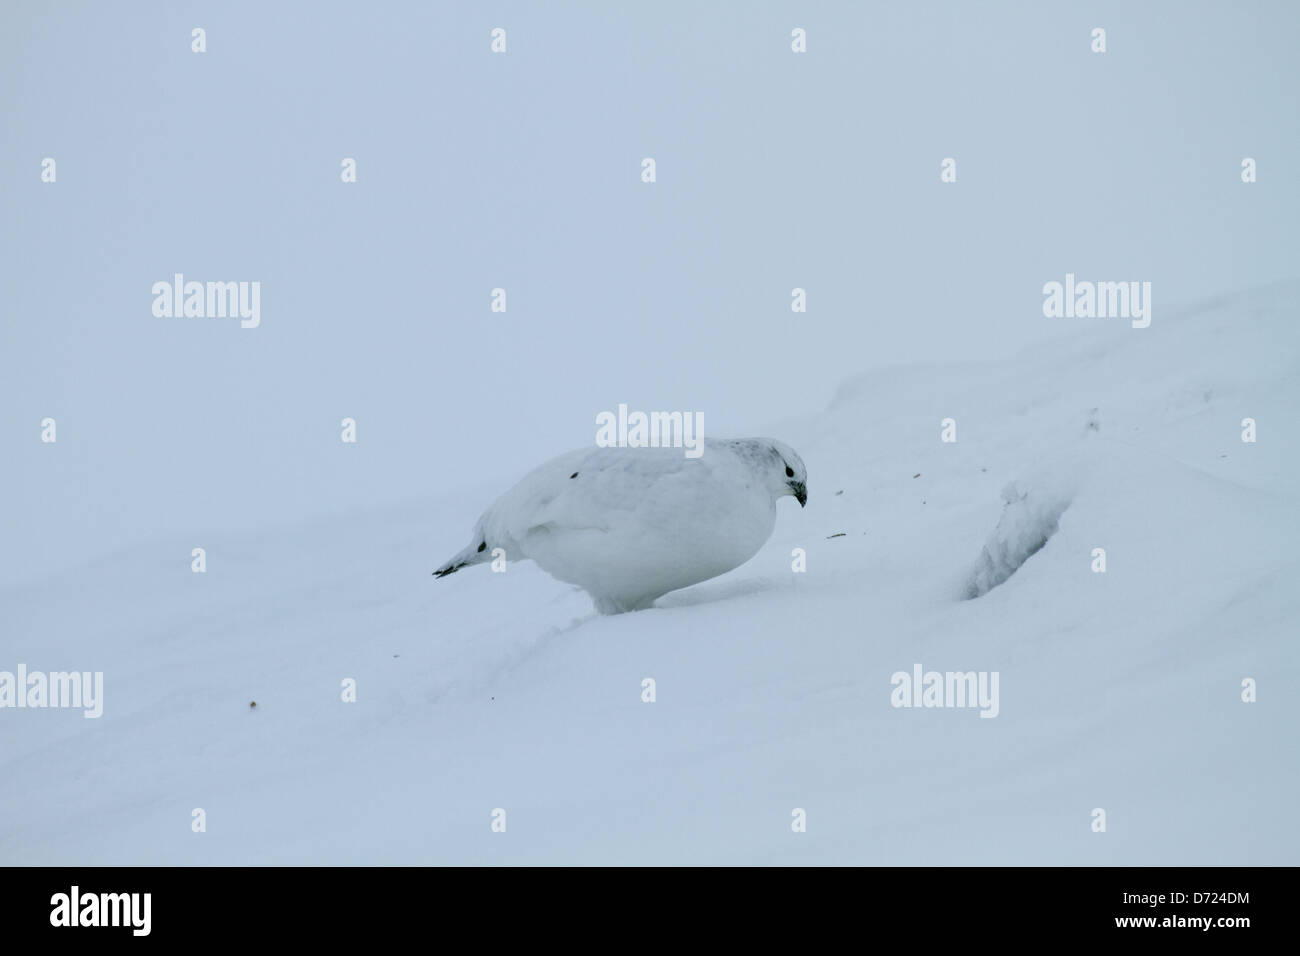 Ptarmigan in snow Stock Photo